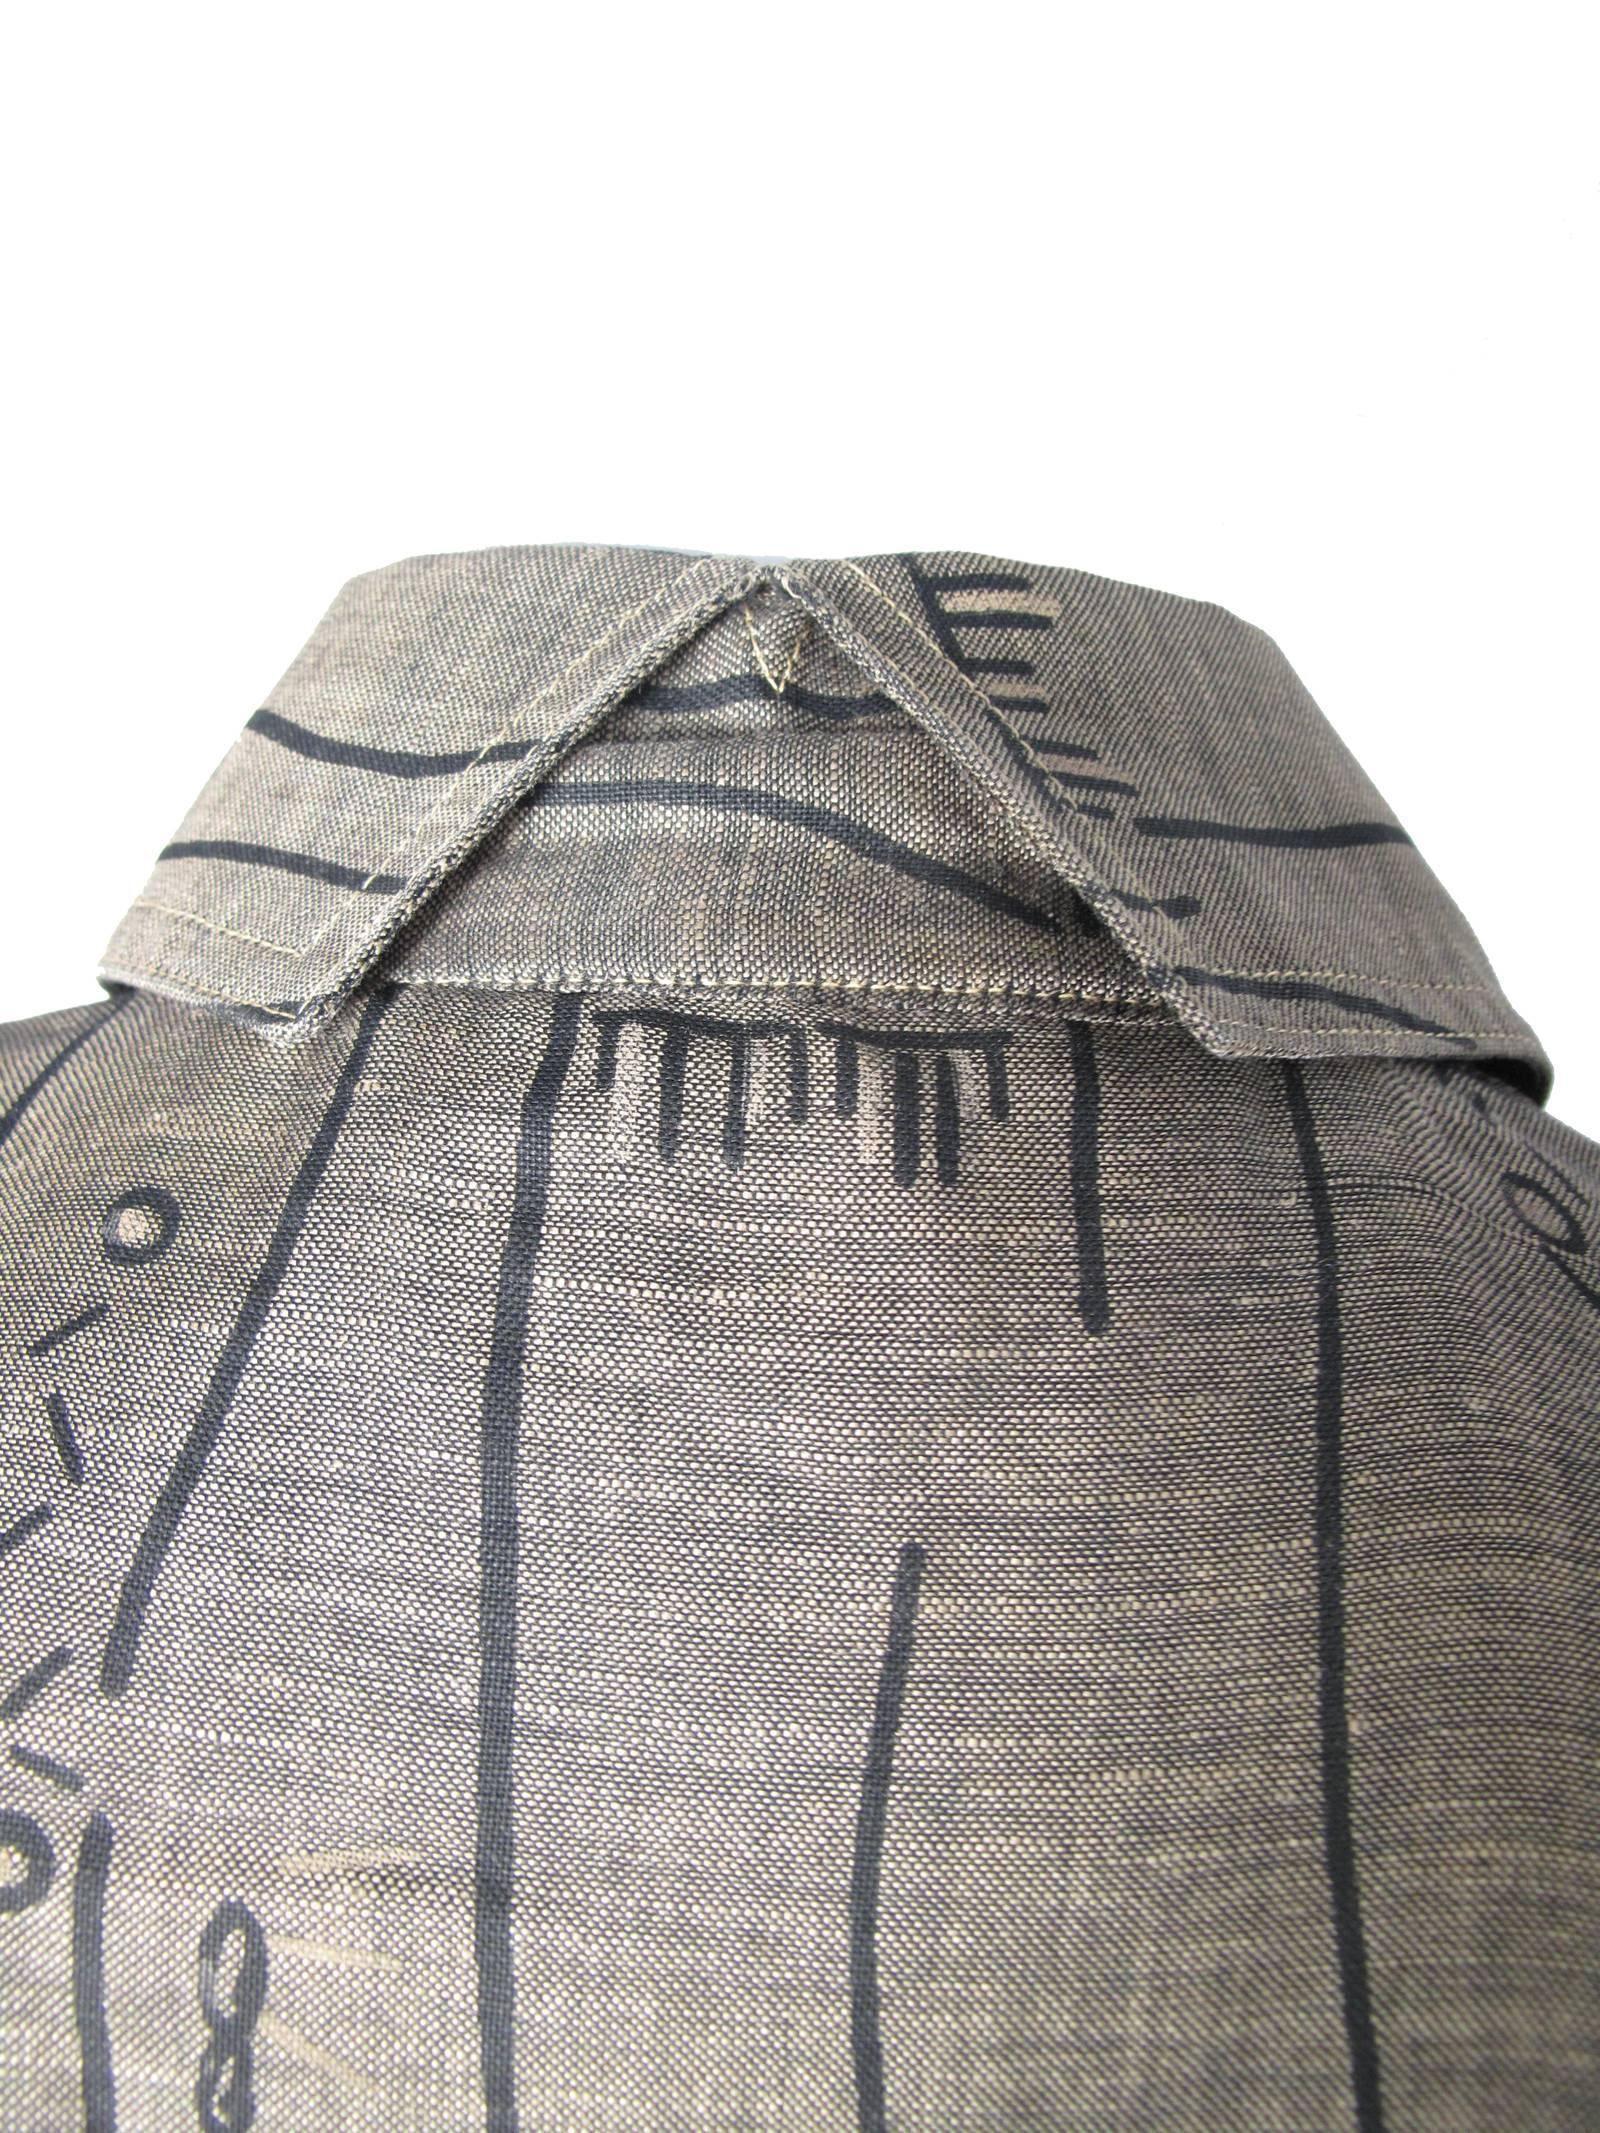 Women's Zandra Rhodes Tribal Printed Cotton Dress 